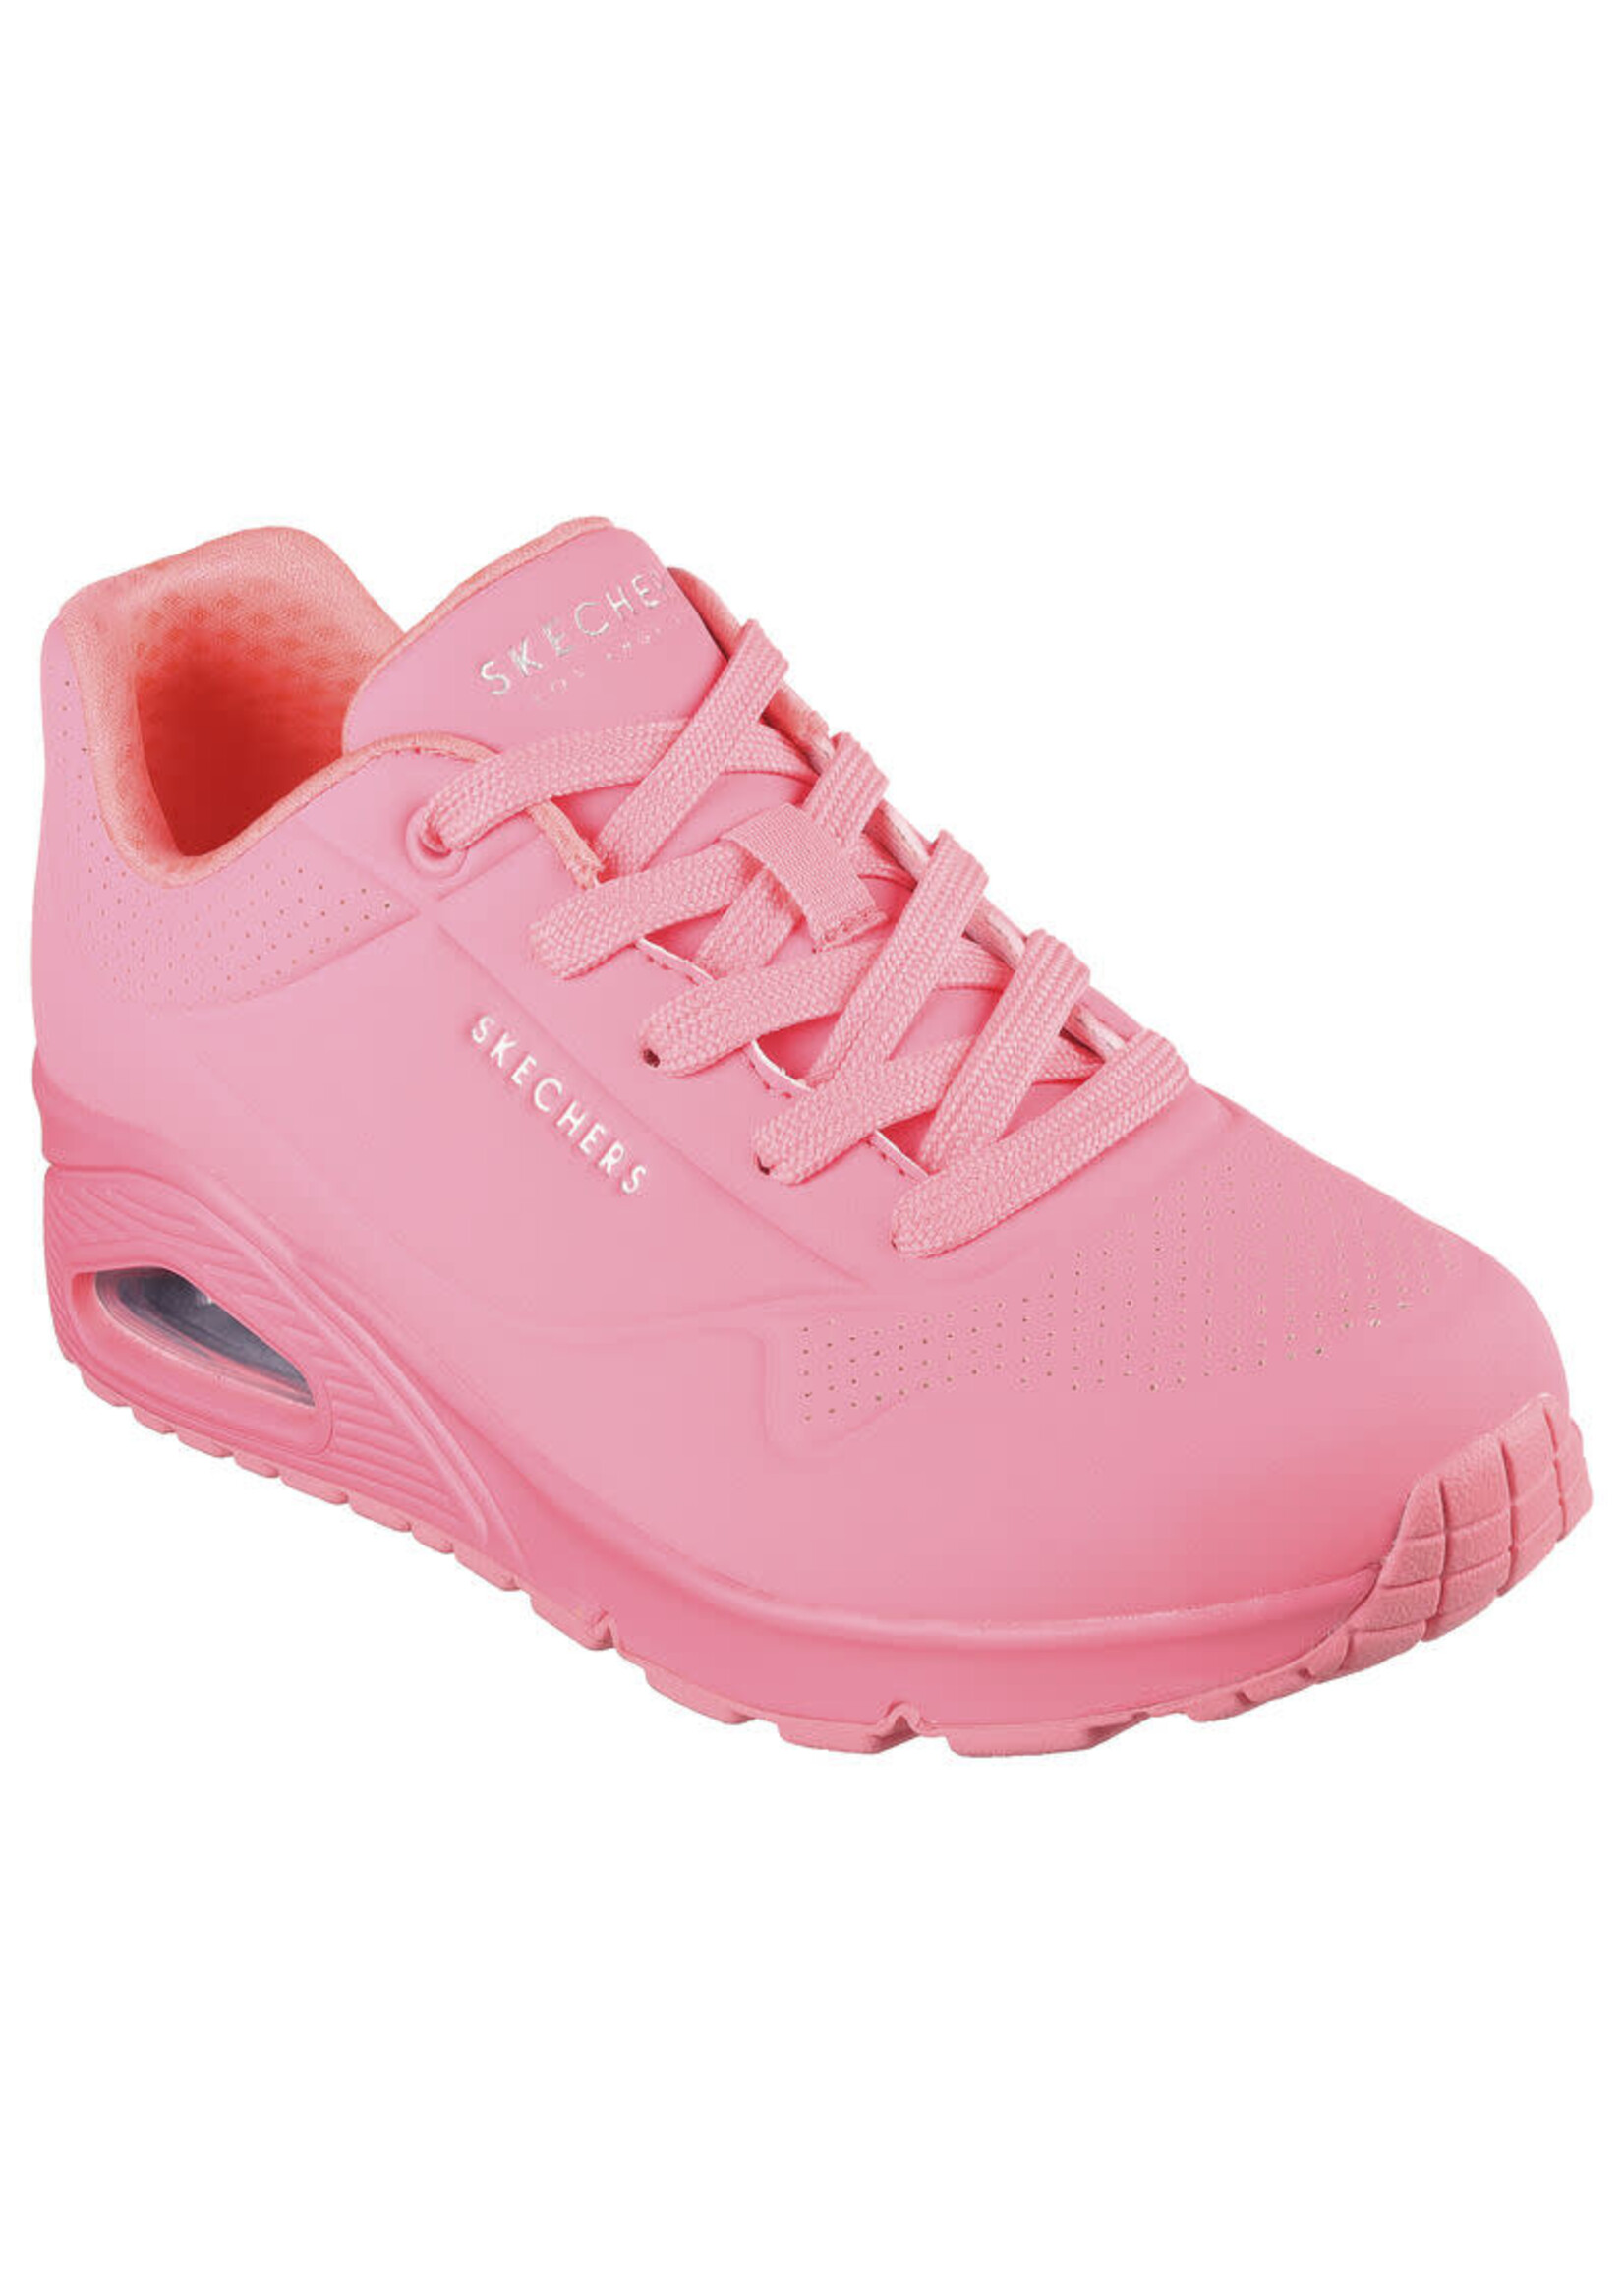  Skechers Women's UNO-HIGH Regards Sneaker, White/Pink, 5